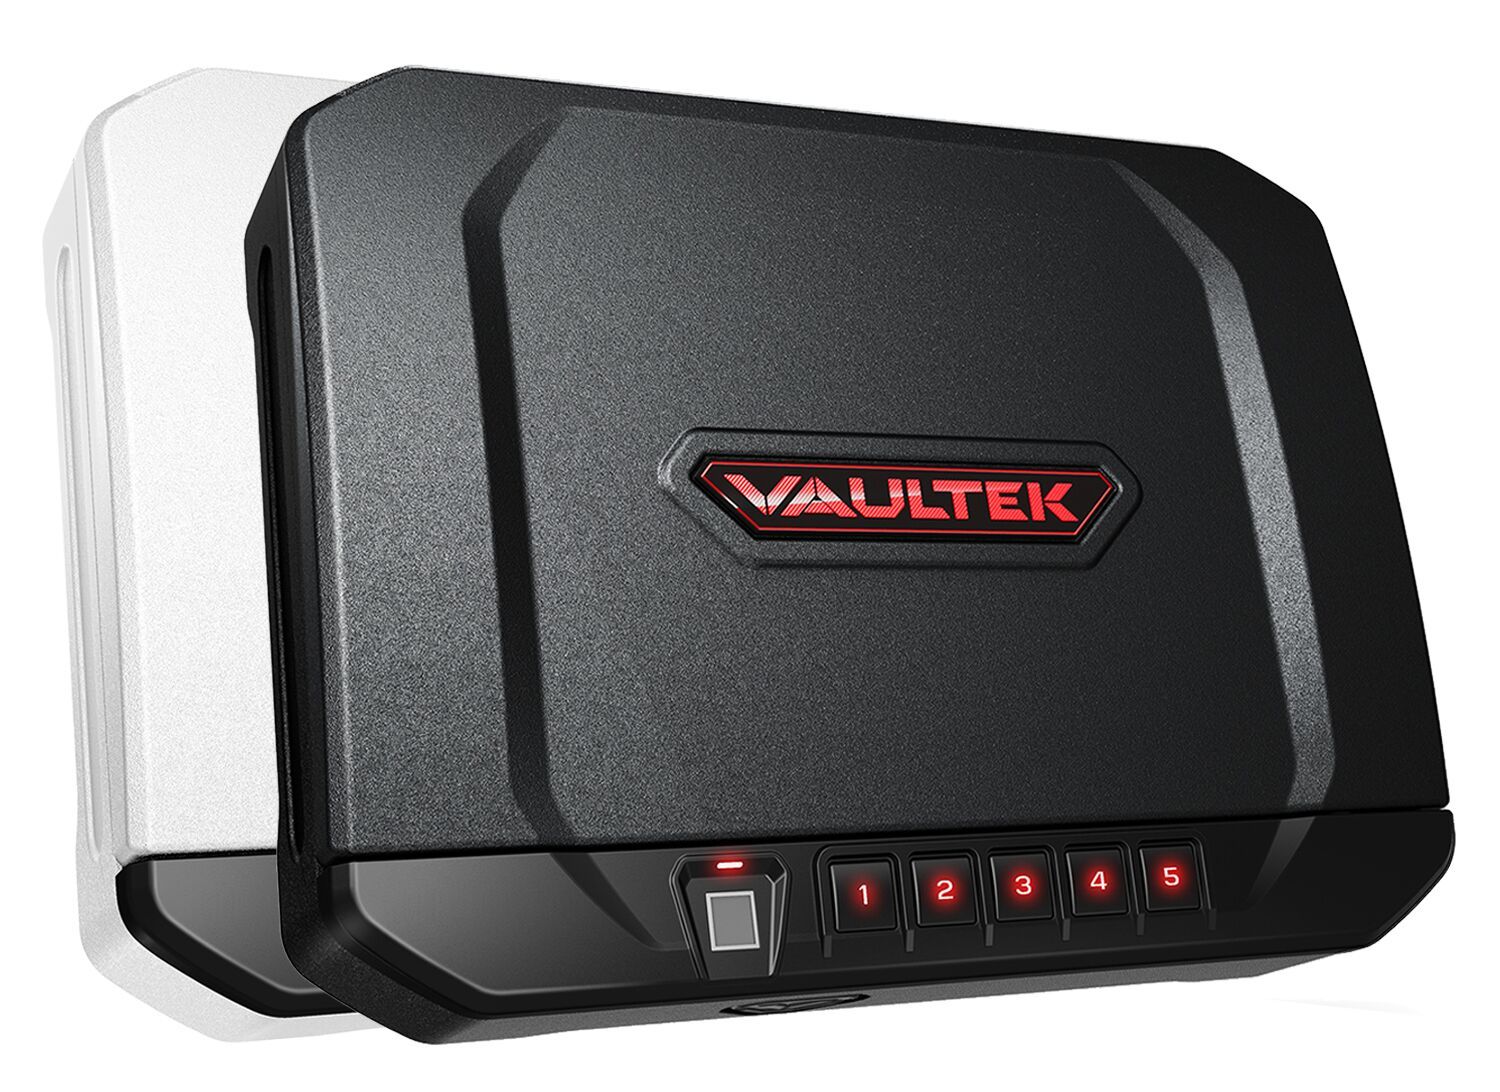 Vaultek VT20i Rugged Biometric Bluetooth Smart Handgun Safe